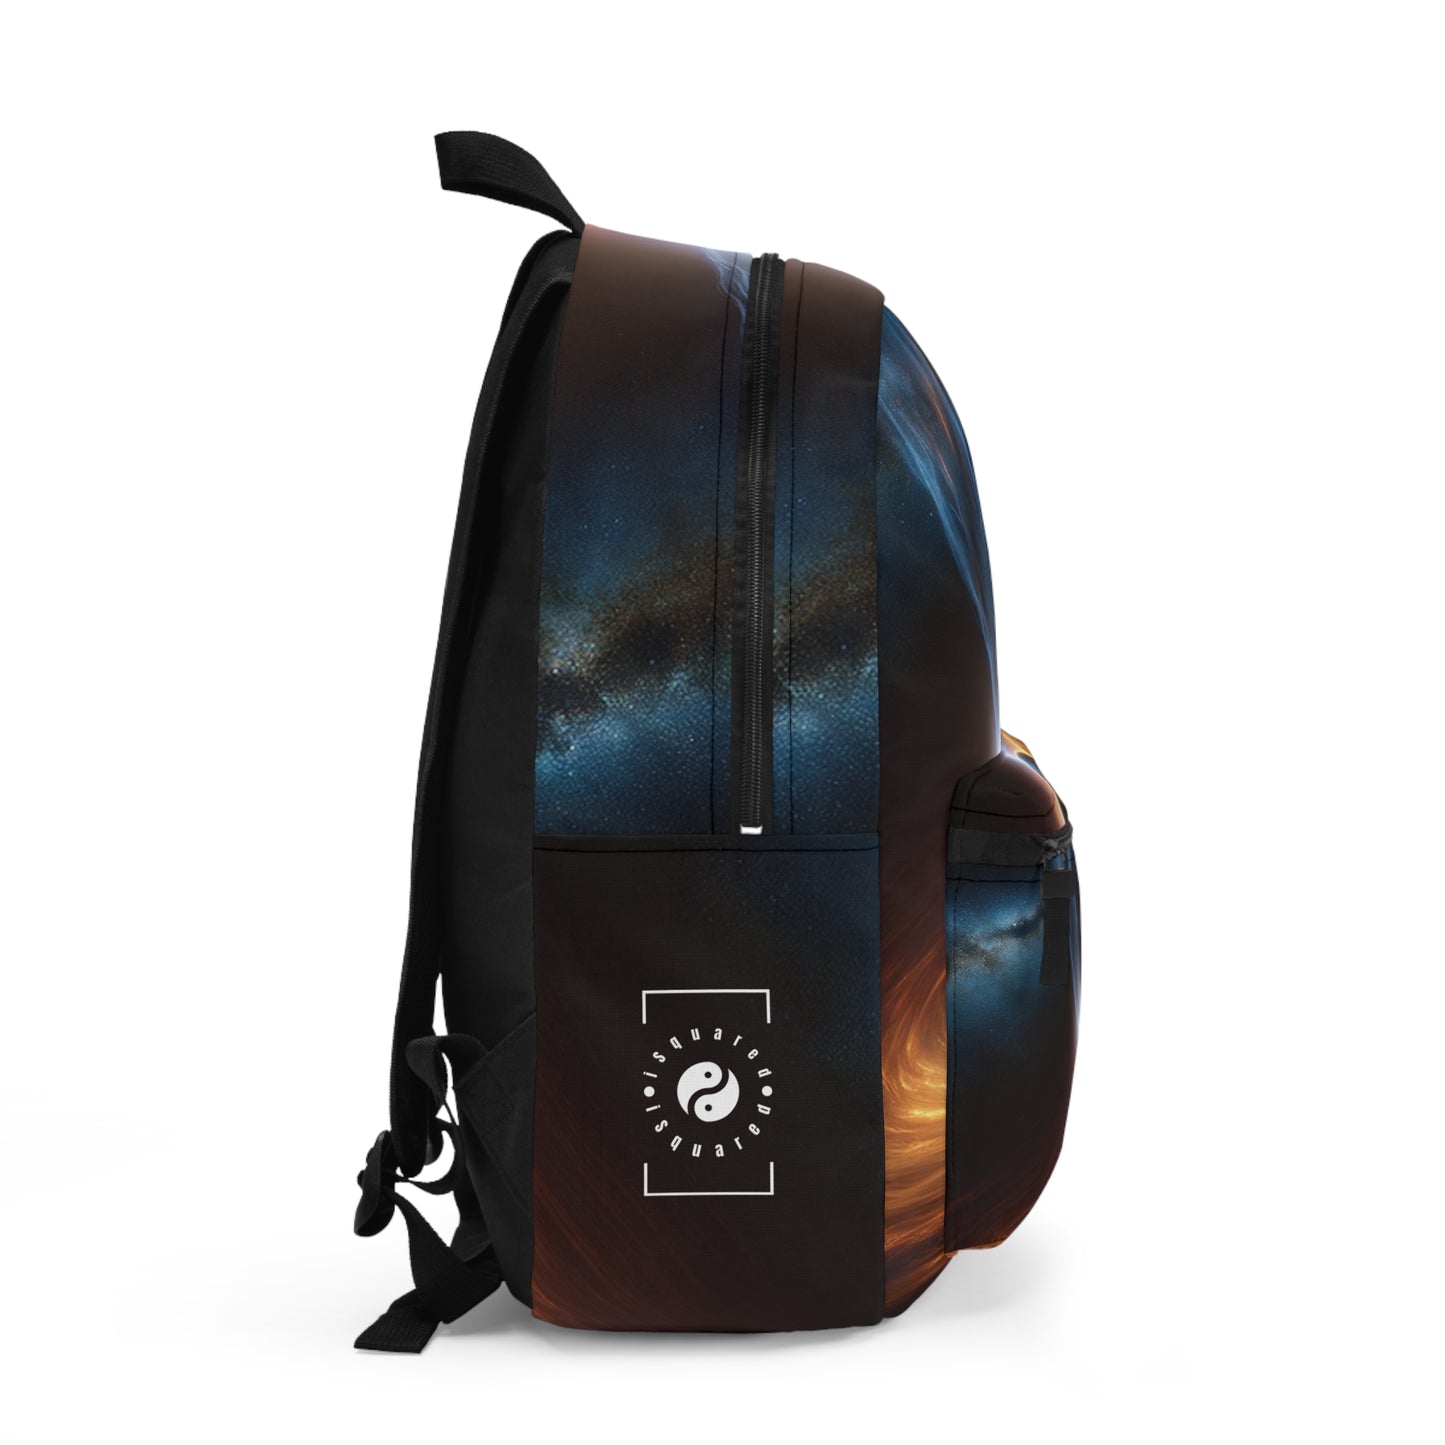 "Discs of Illumination: Black Hole Reverie" - Backpack